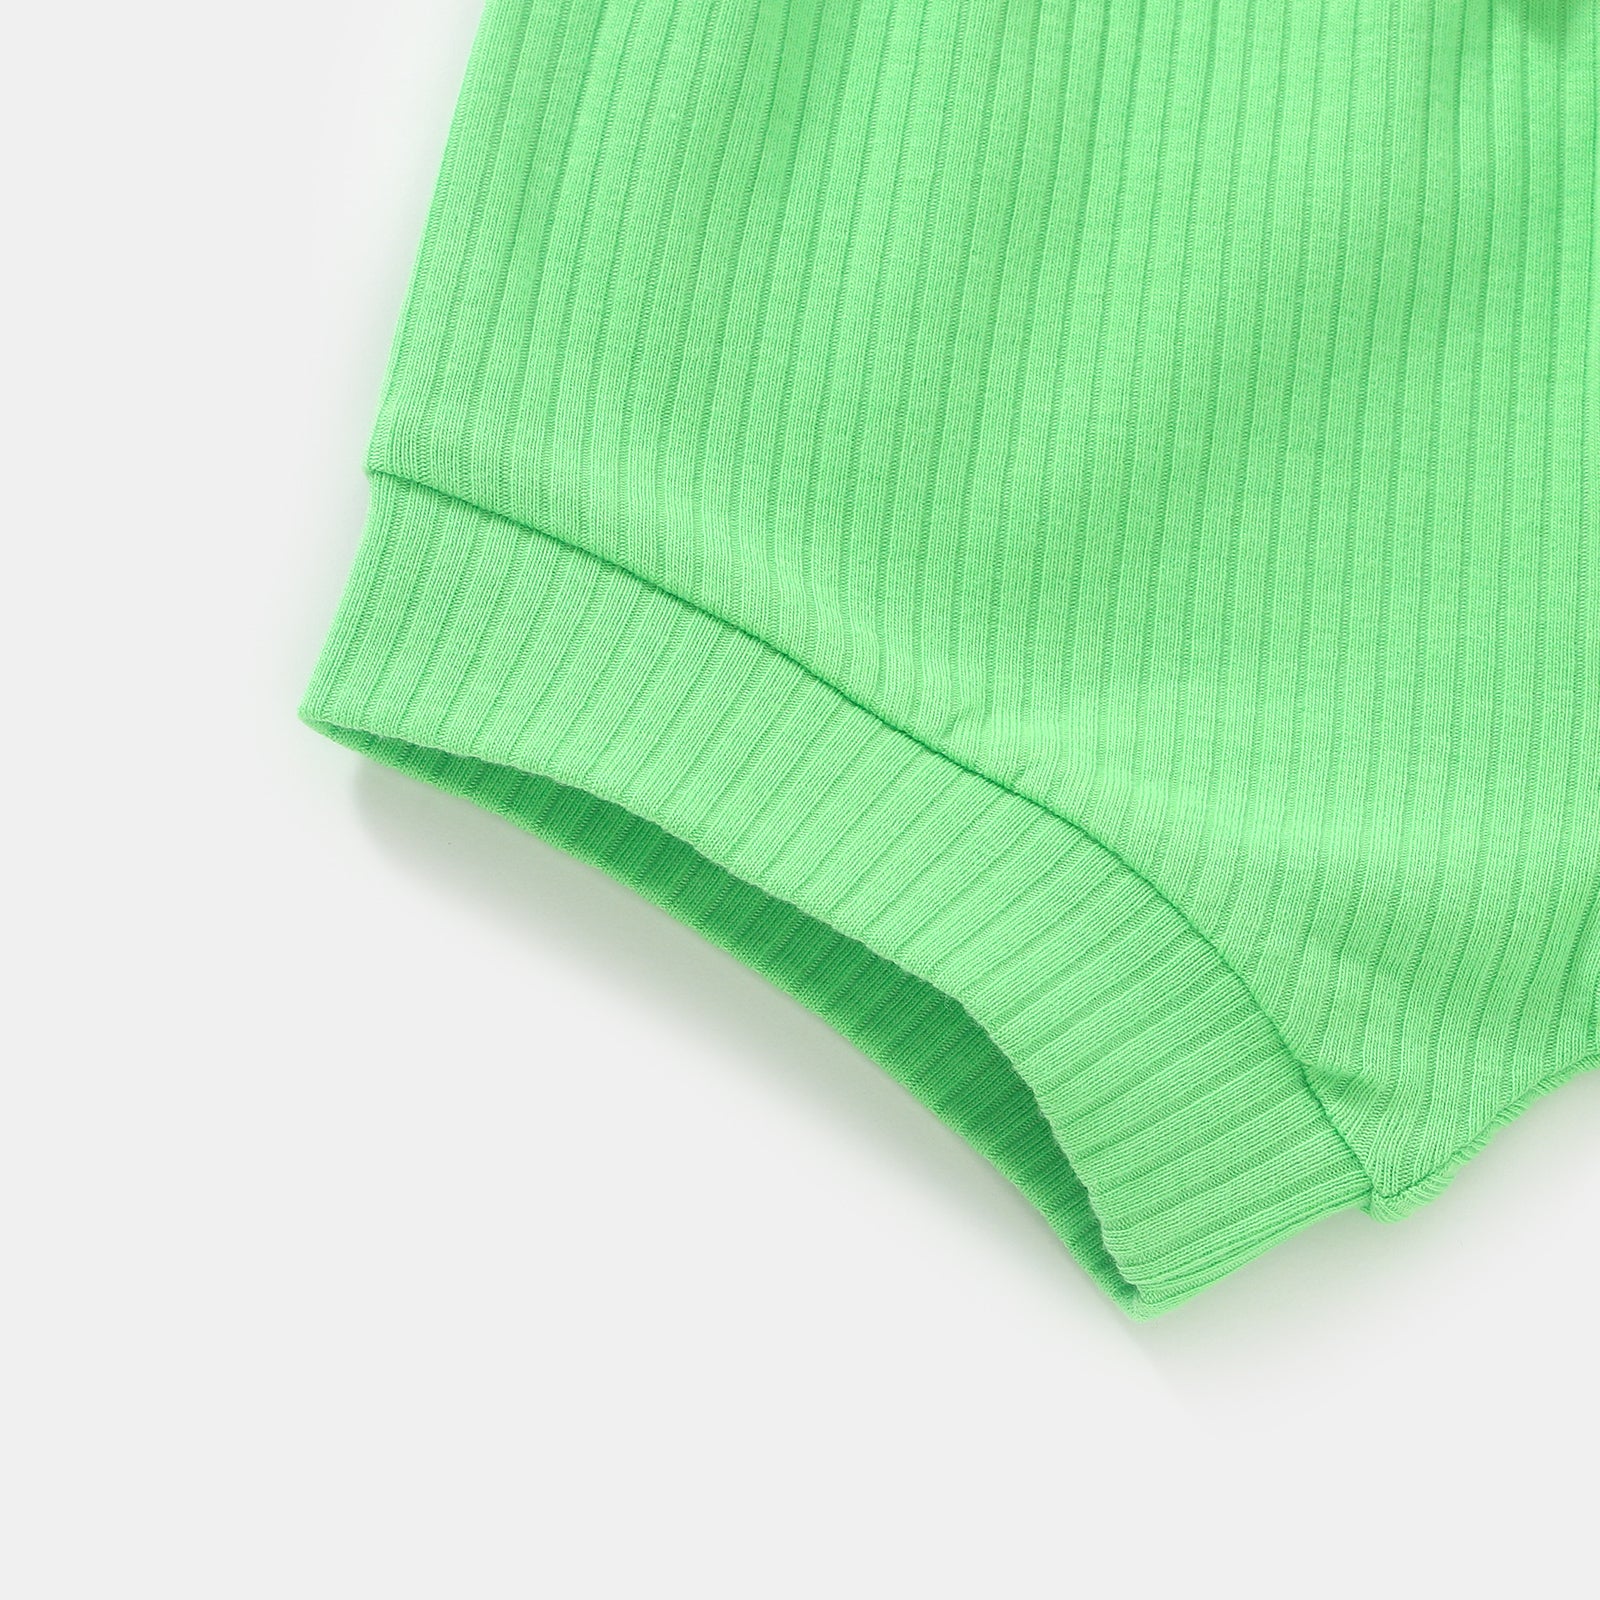 ClayBARE Soft Green Ribbed Shorts (Shorts only)